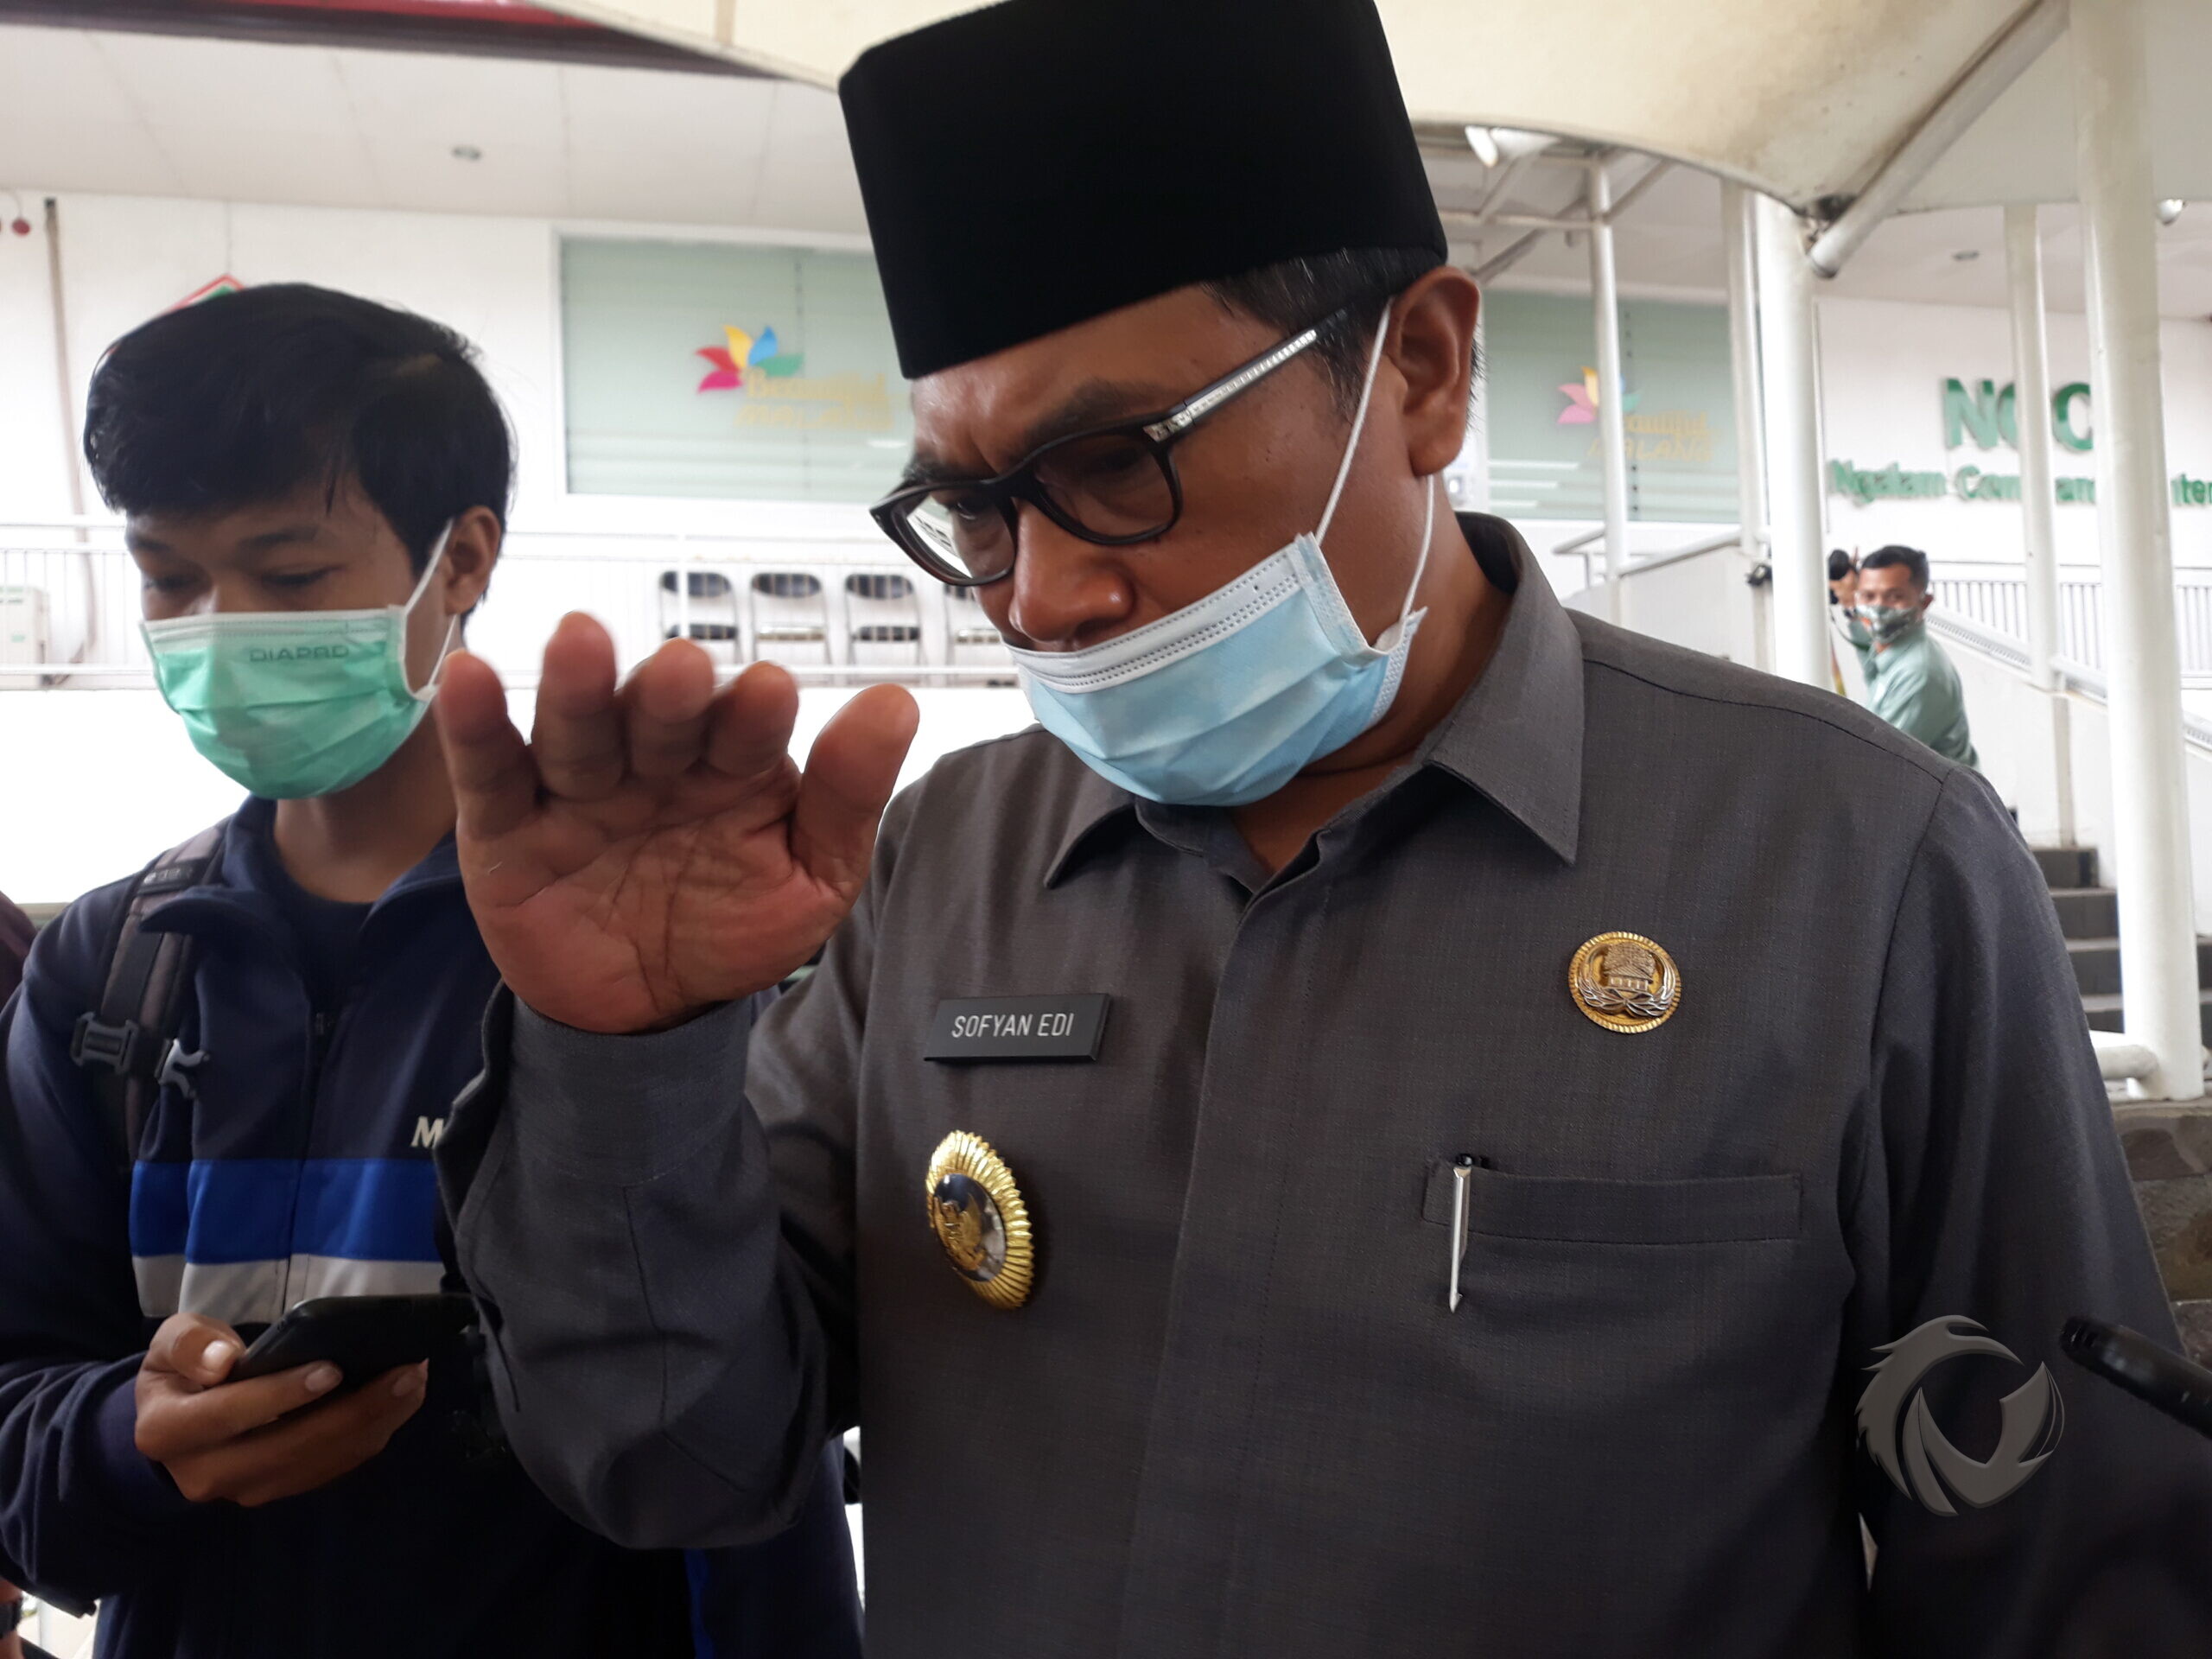 Wakil Walikota Malang, Sofyan Edi Jarwoko